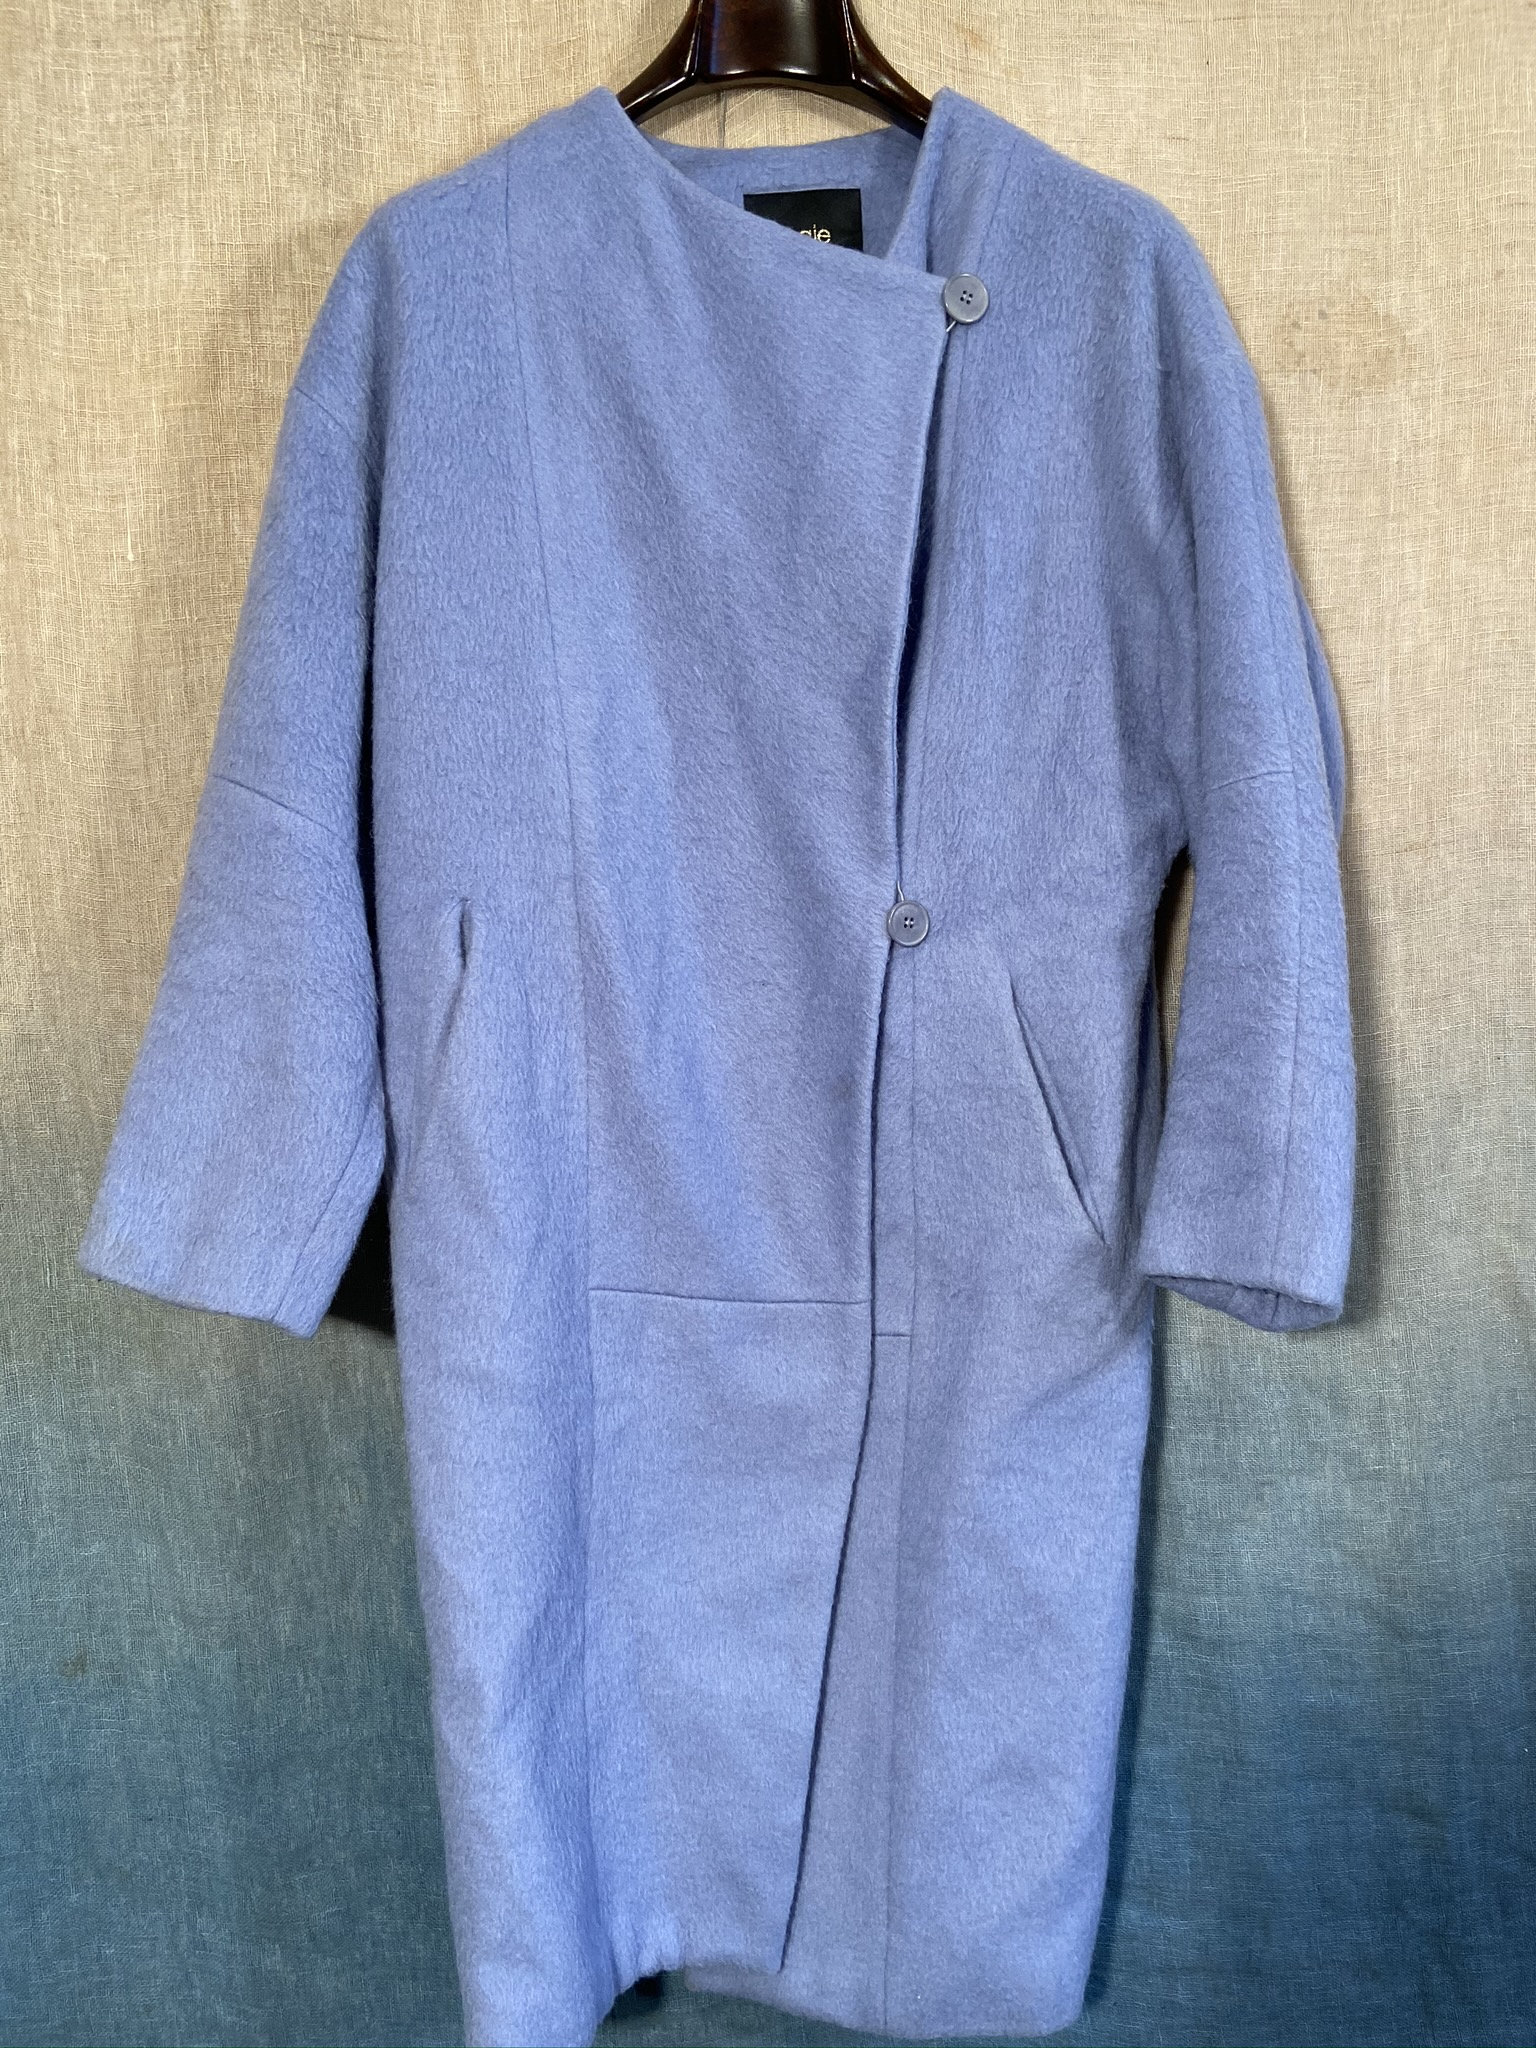 Maje Coat Baby Blue Asymmetrical Stylish Cool Wear season | Etsy